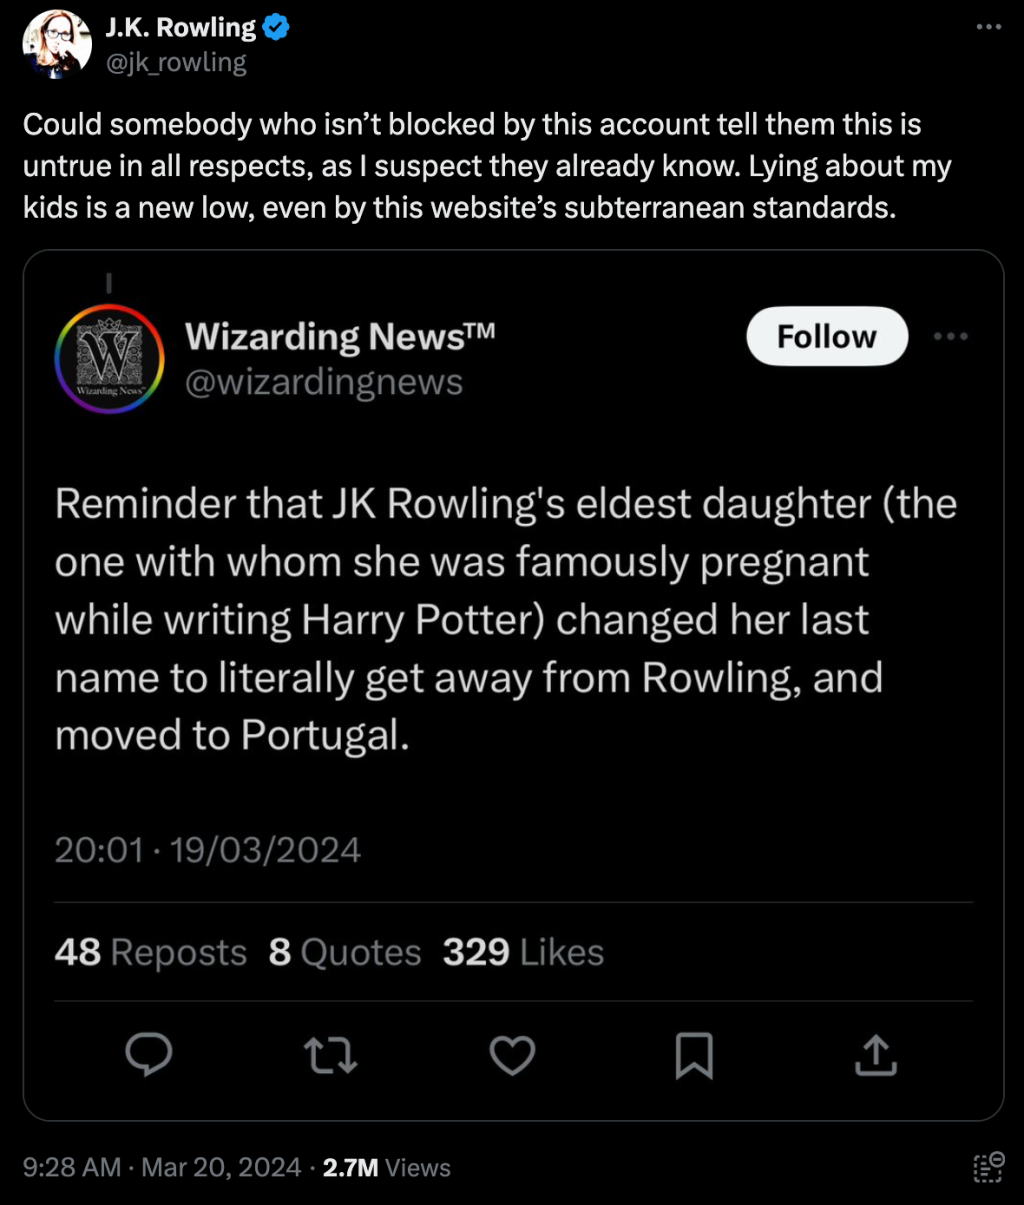 J.K. Rowling (@jk_rowling) on X